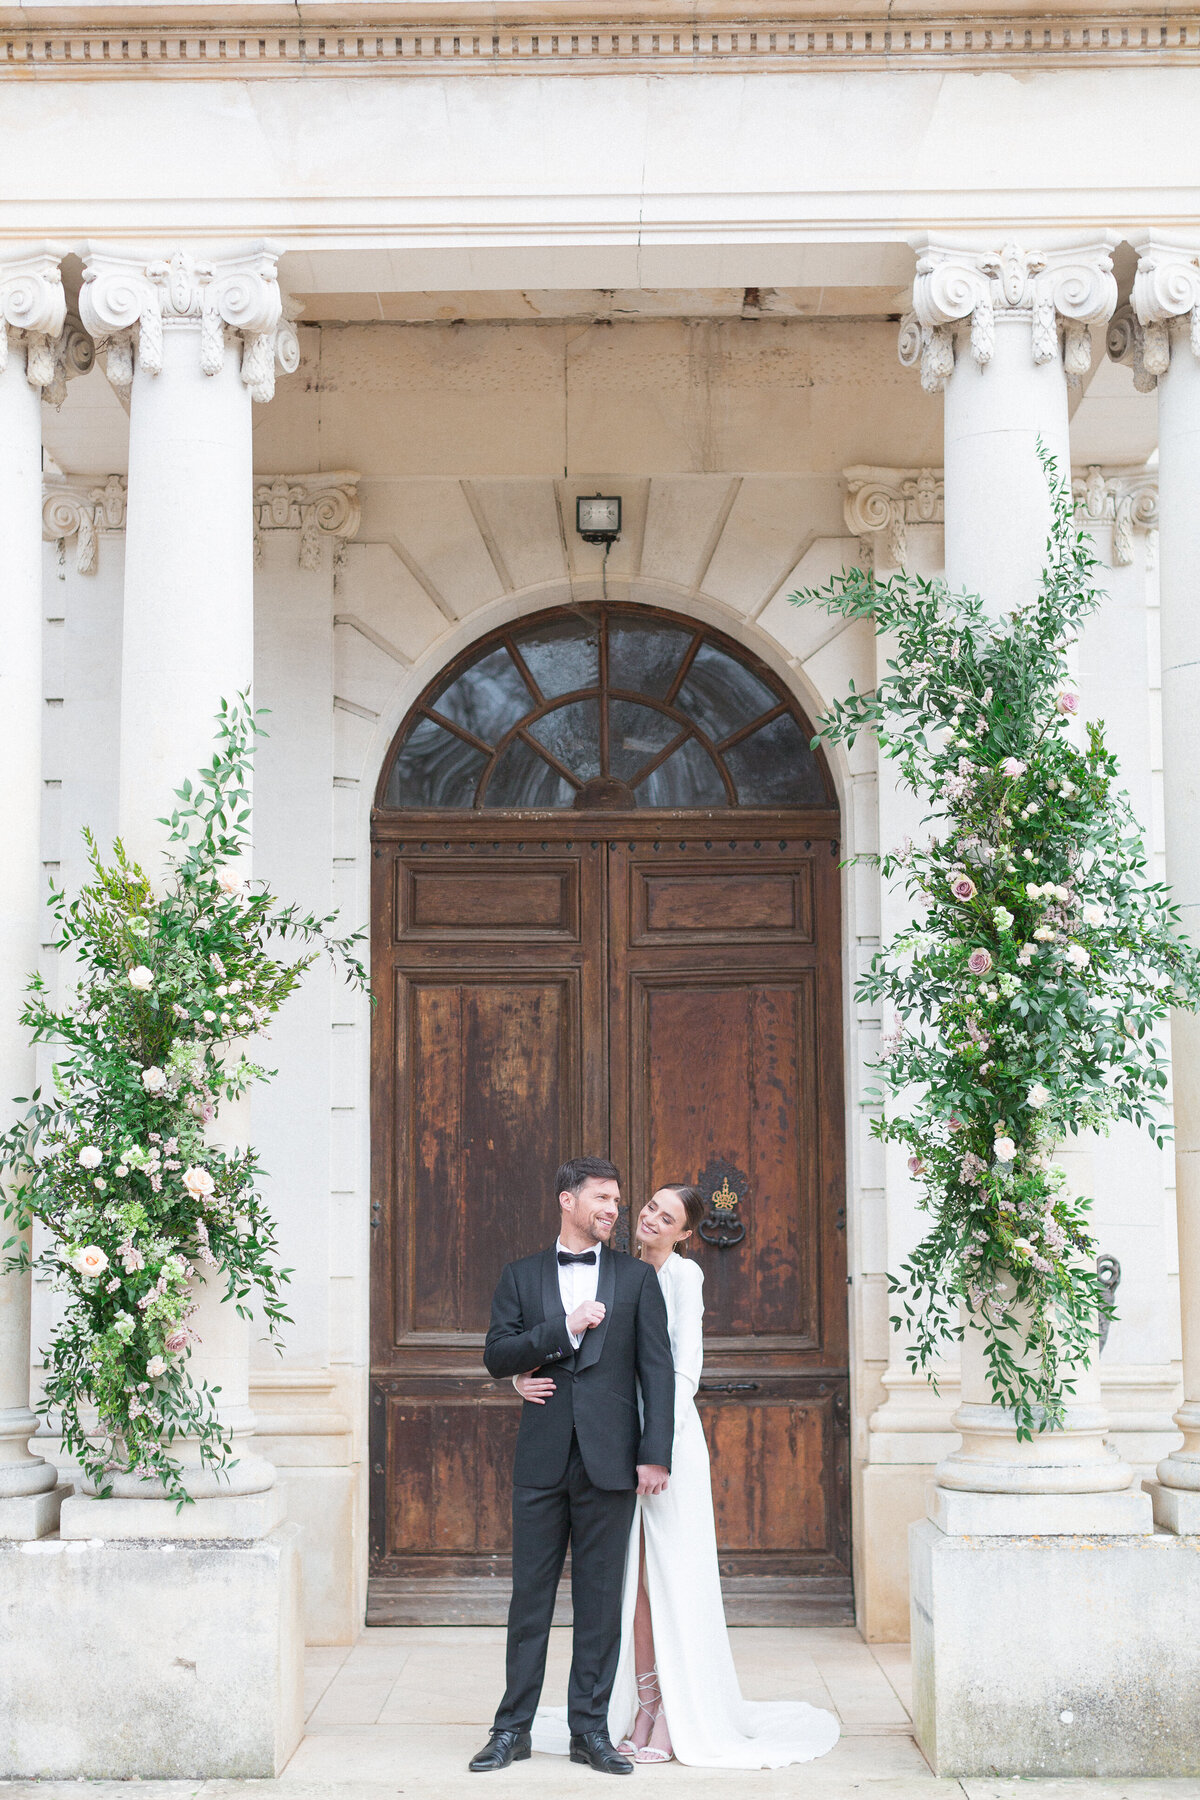 wedding - Marcellus - photographe - cesarem - decoration - villa - italy - mariage-28